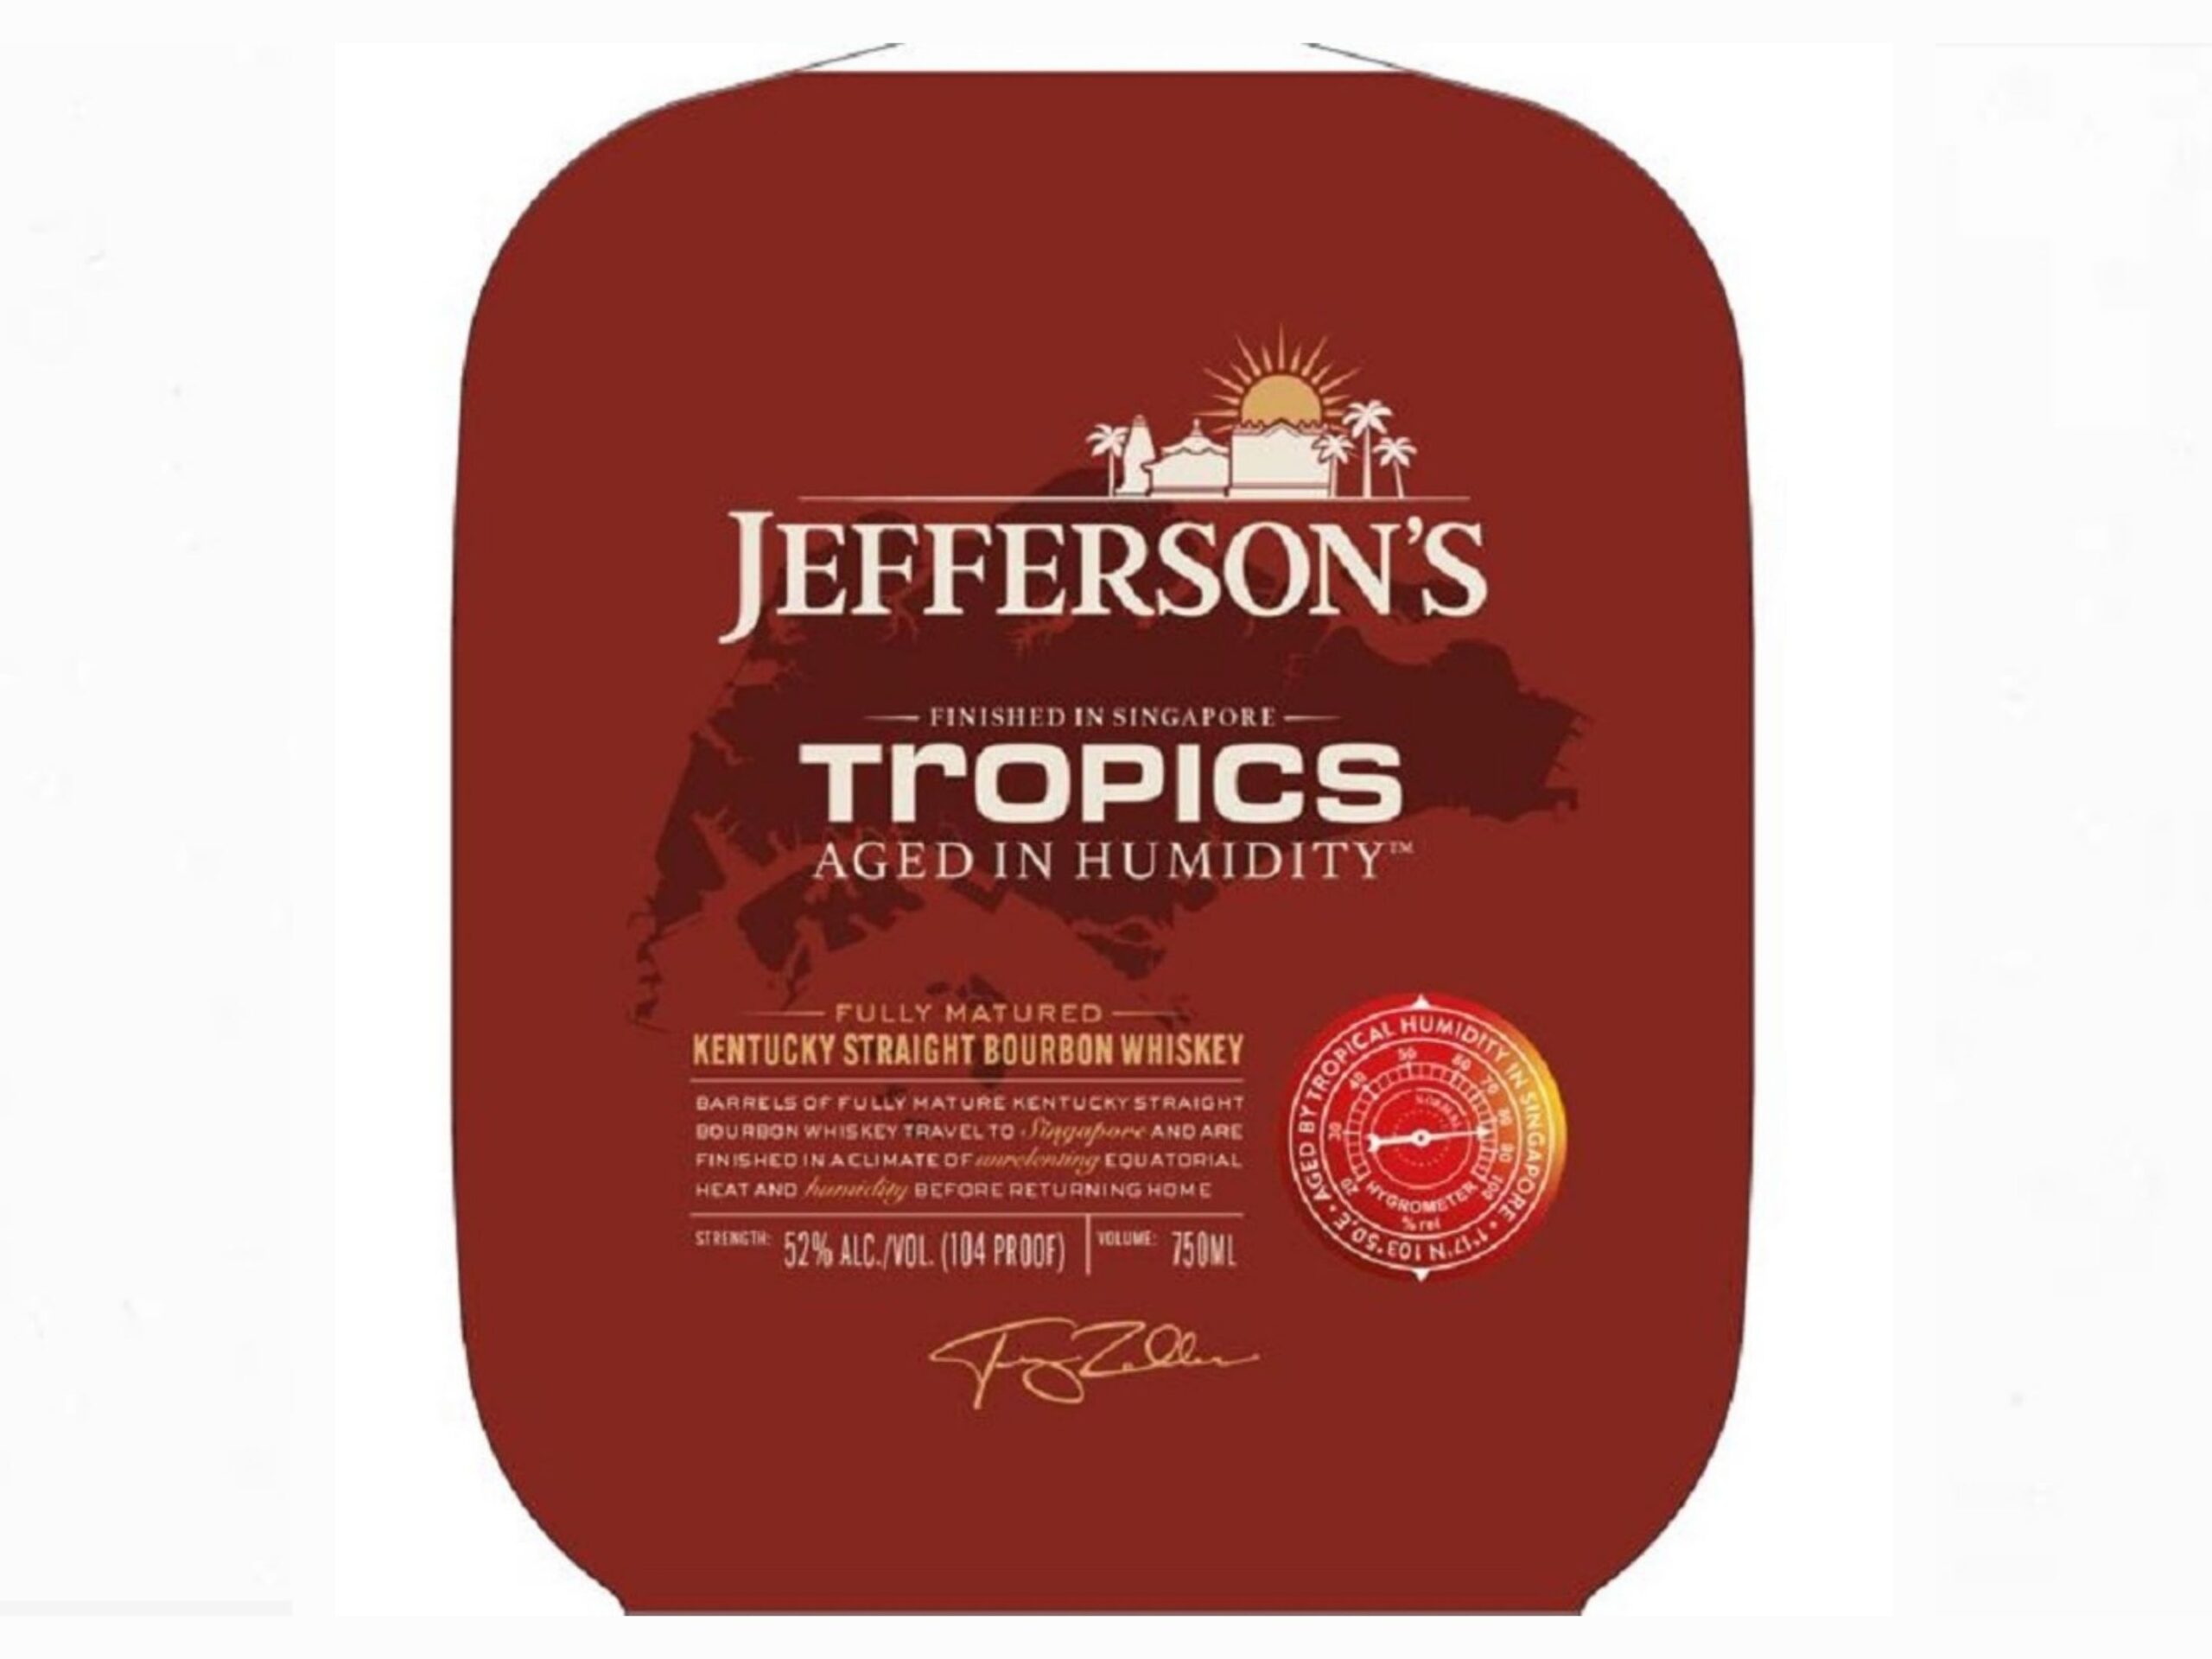 Jefferson's Tropics